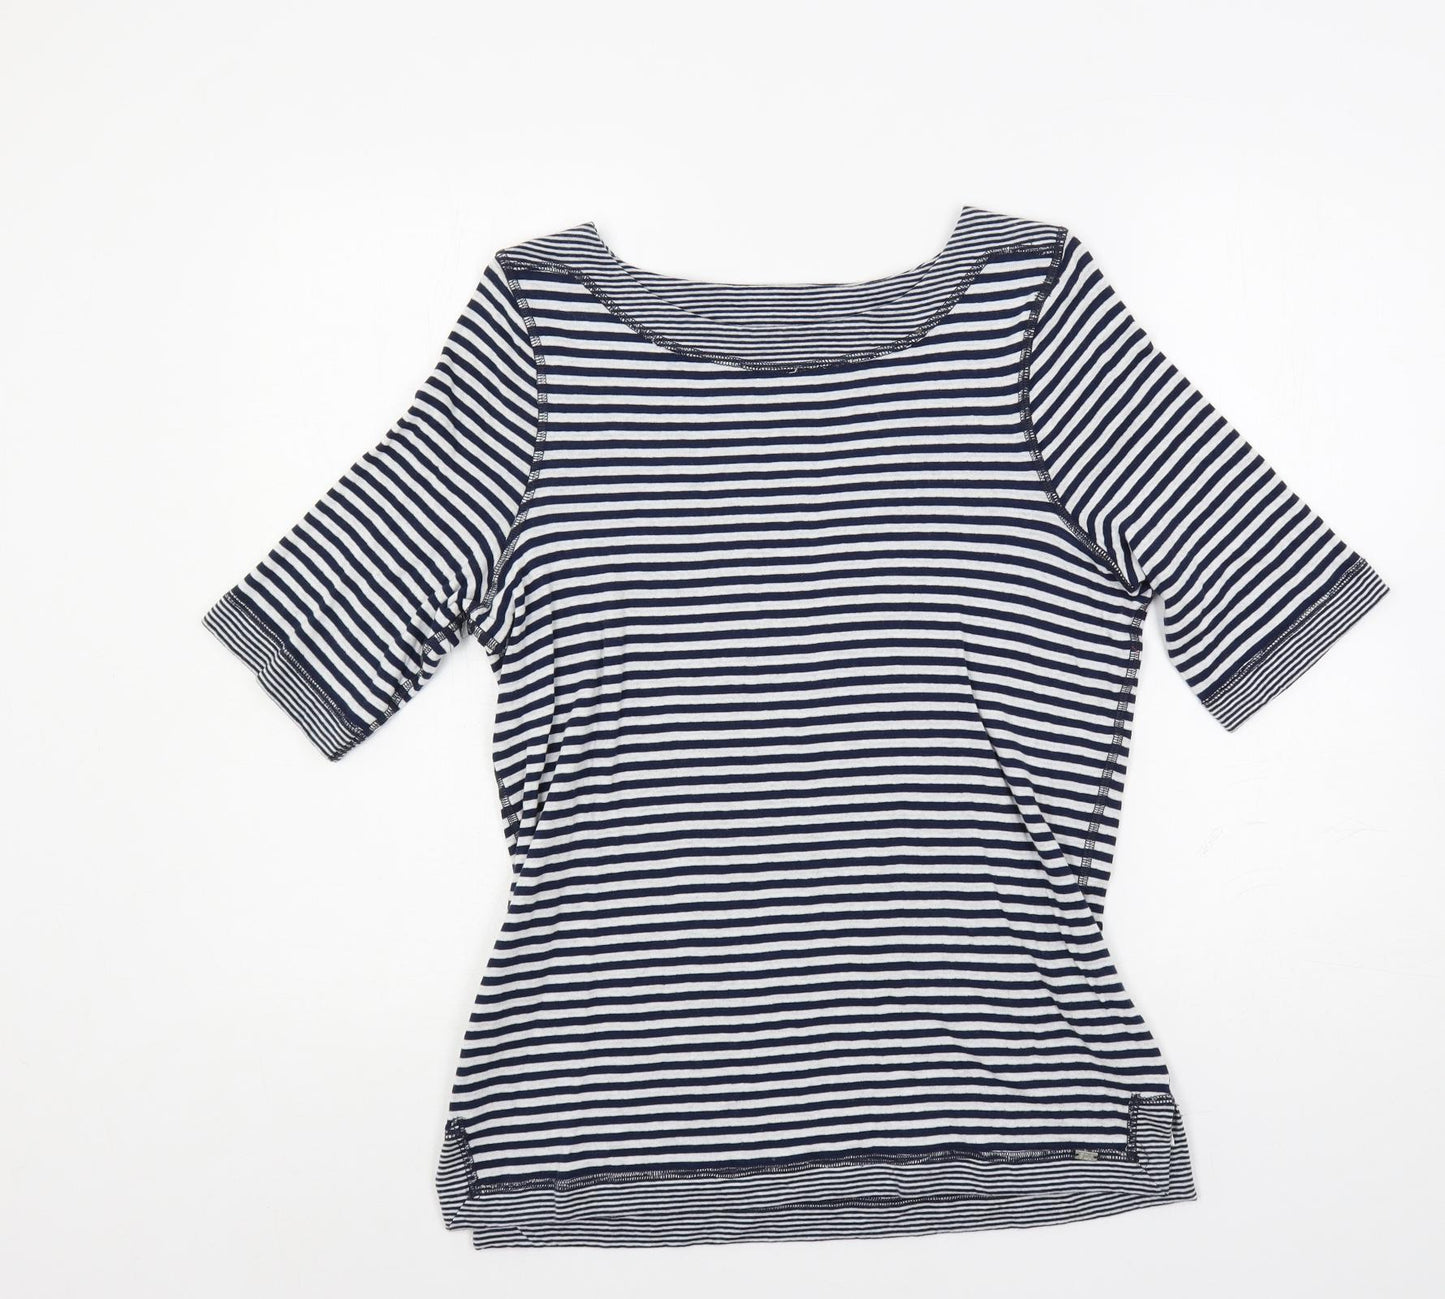 FDJ Womens Blue Striped Cotton Basic T-Shirt Size S Boat Neck